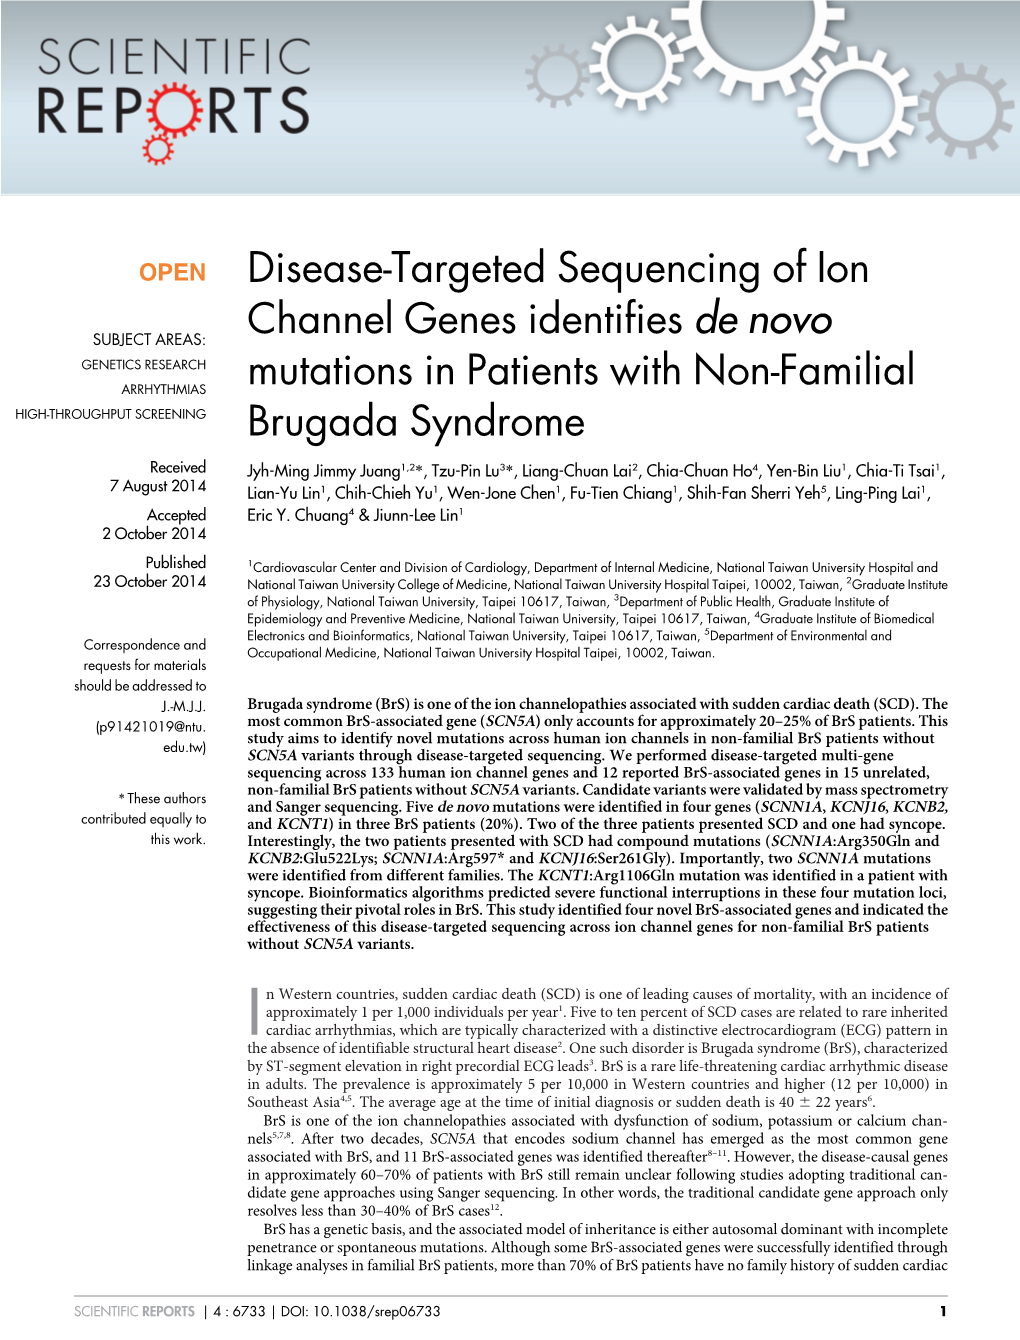 Disease-Targeted Sequencing of Ion Channel Genes Identifies De Novo